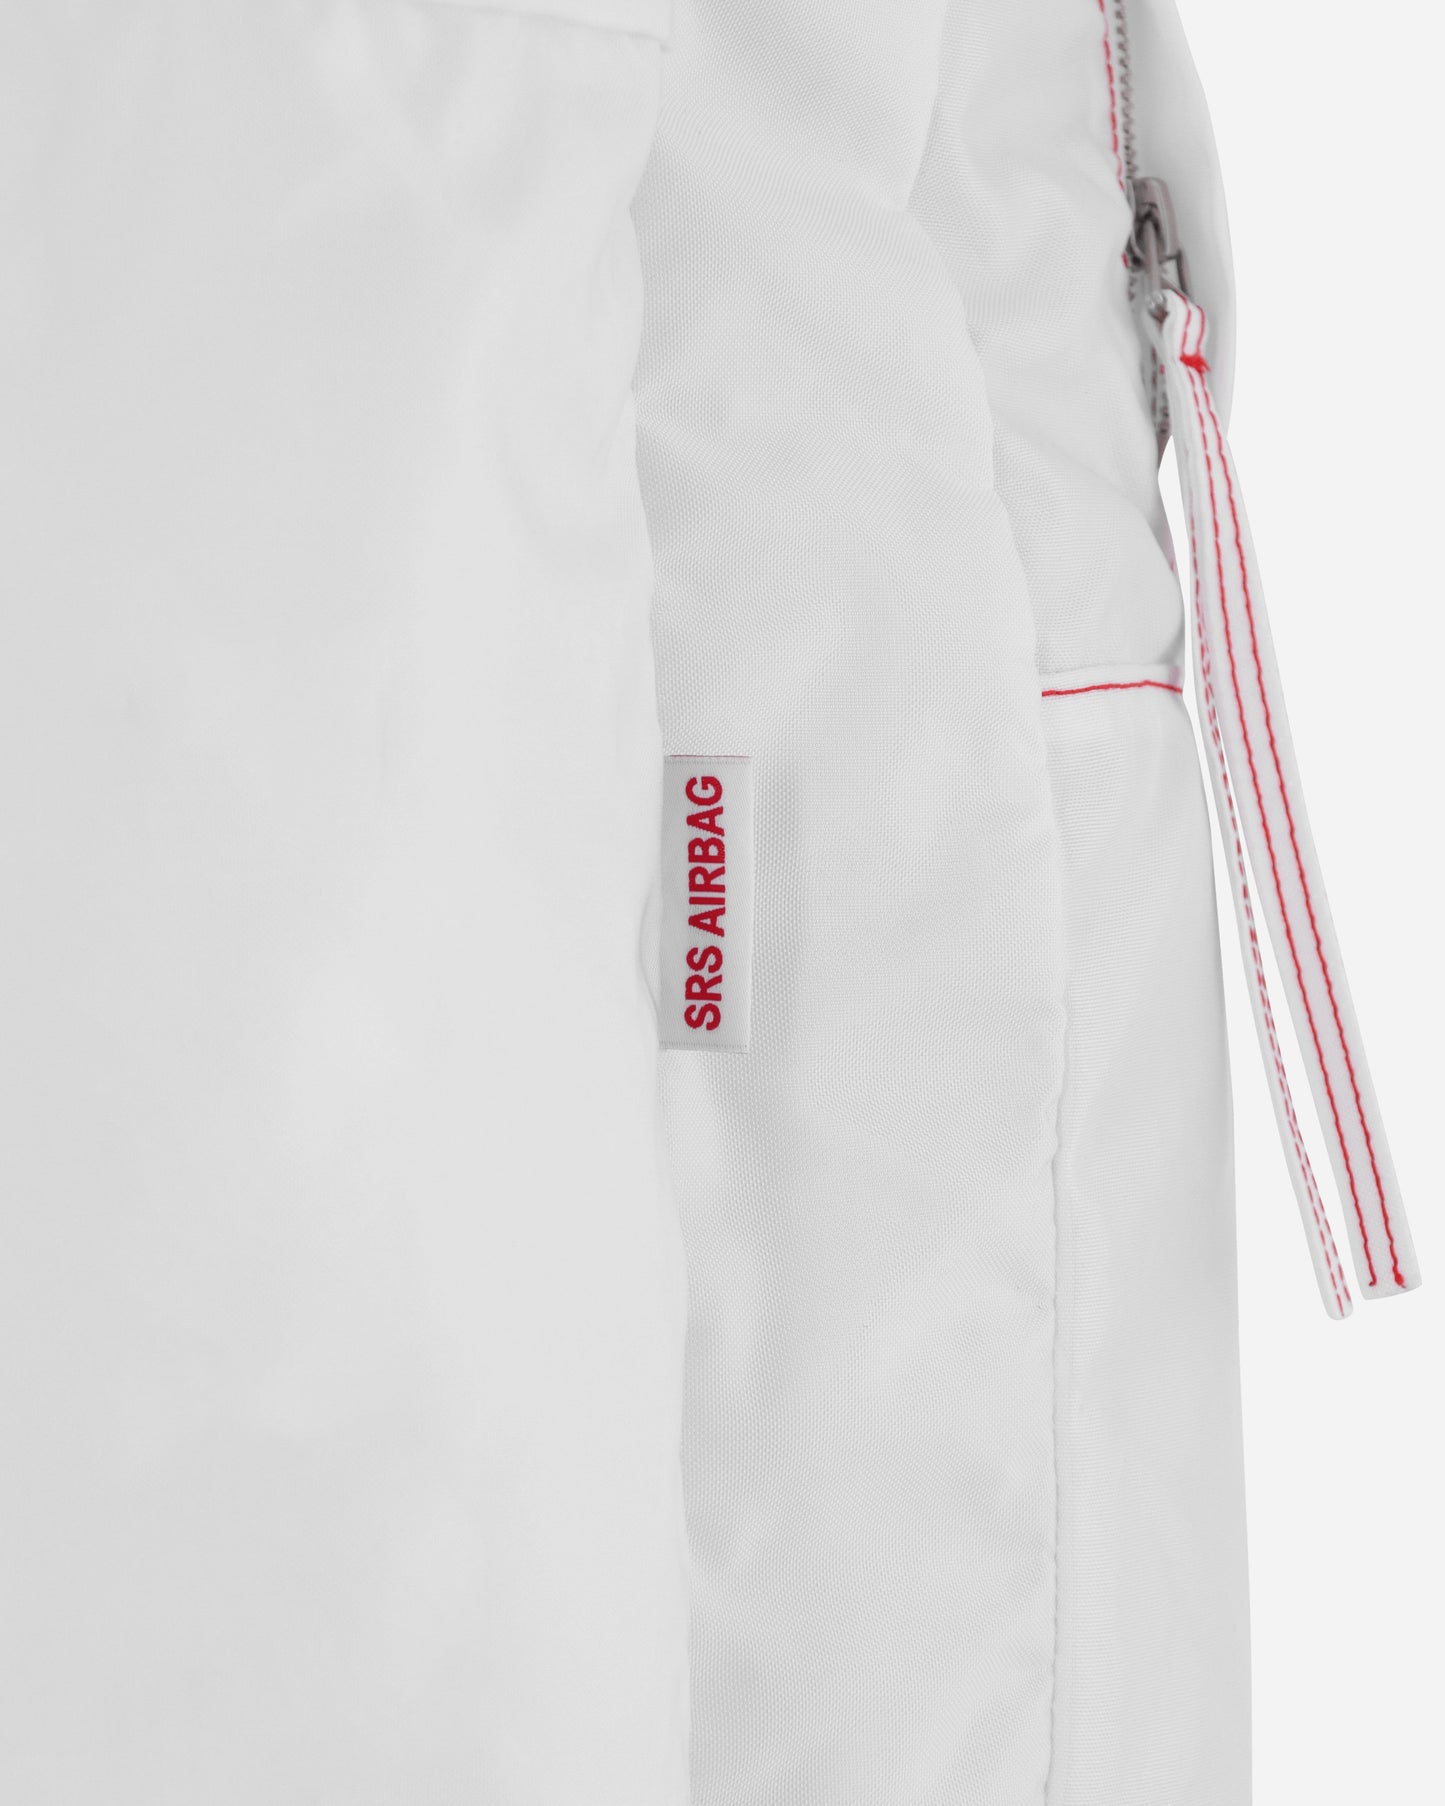 Kanghyuk Airbag Embossed Backpack White/Red Stitch  Bags and Backpacks Backpacks RMA22SSAC01 002